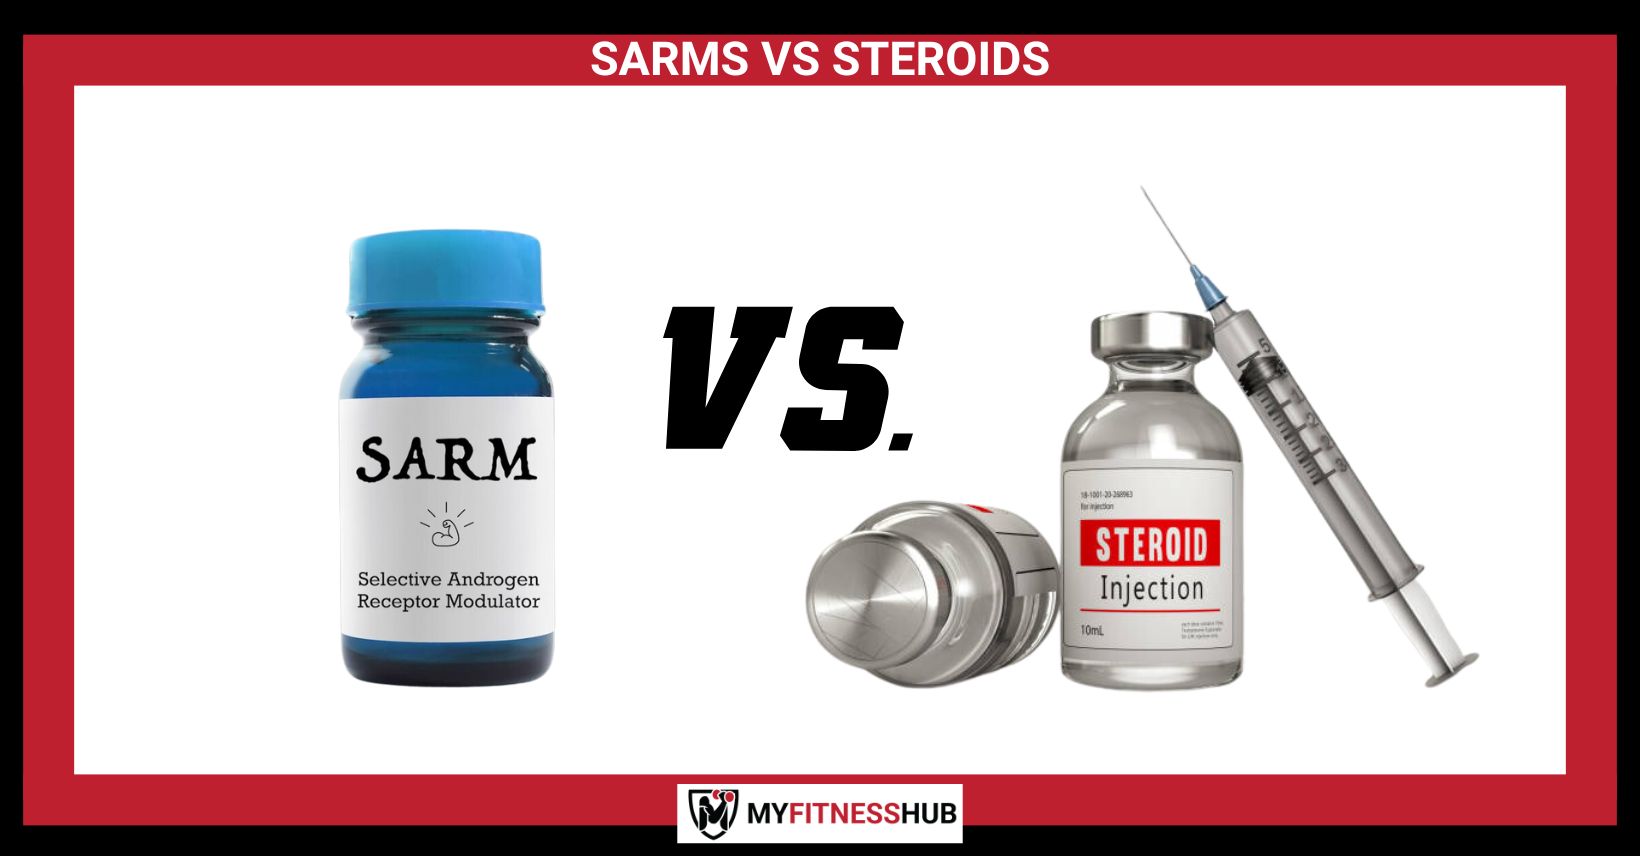 sarms-and-steroids-comparison-1640x856.jpg